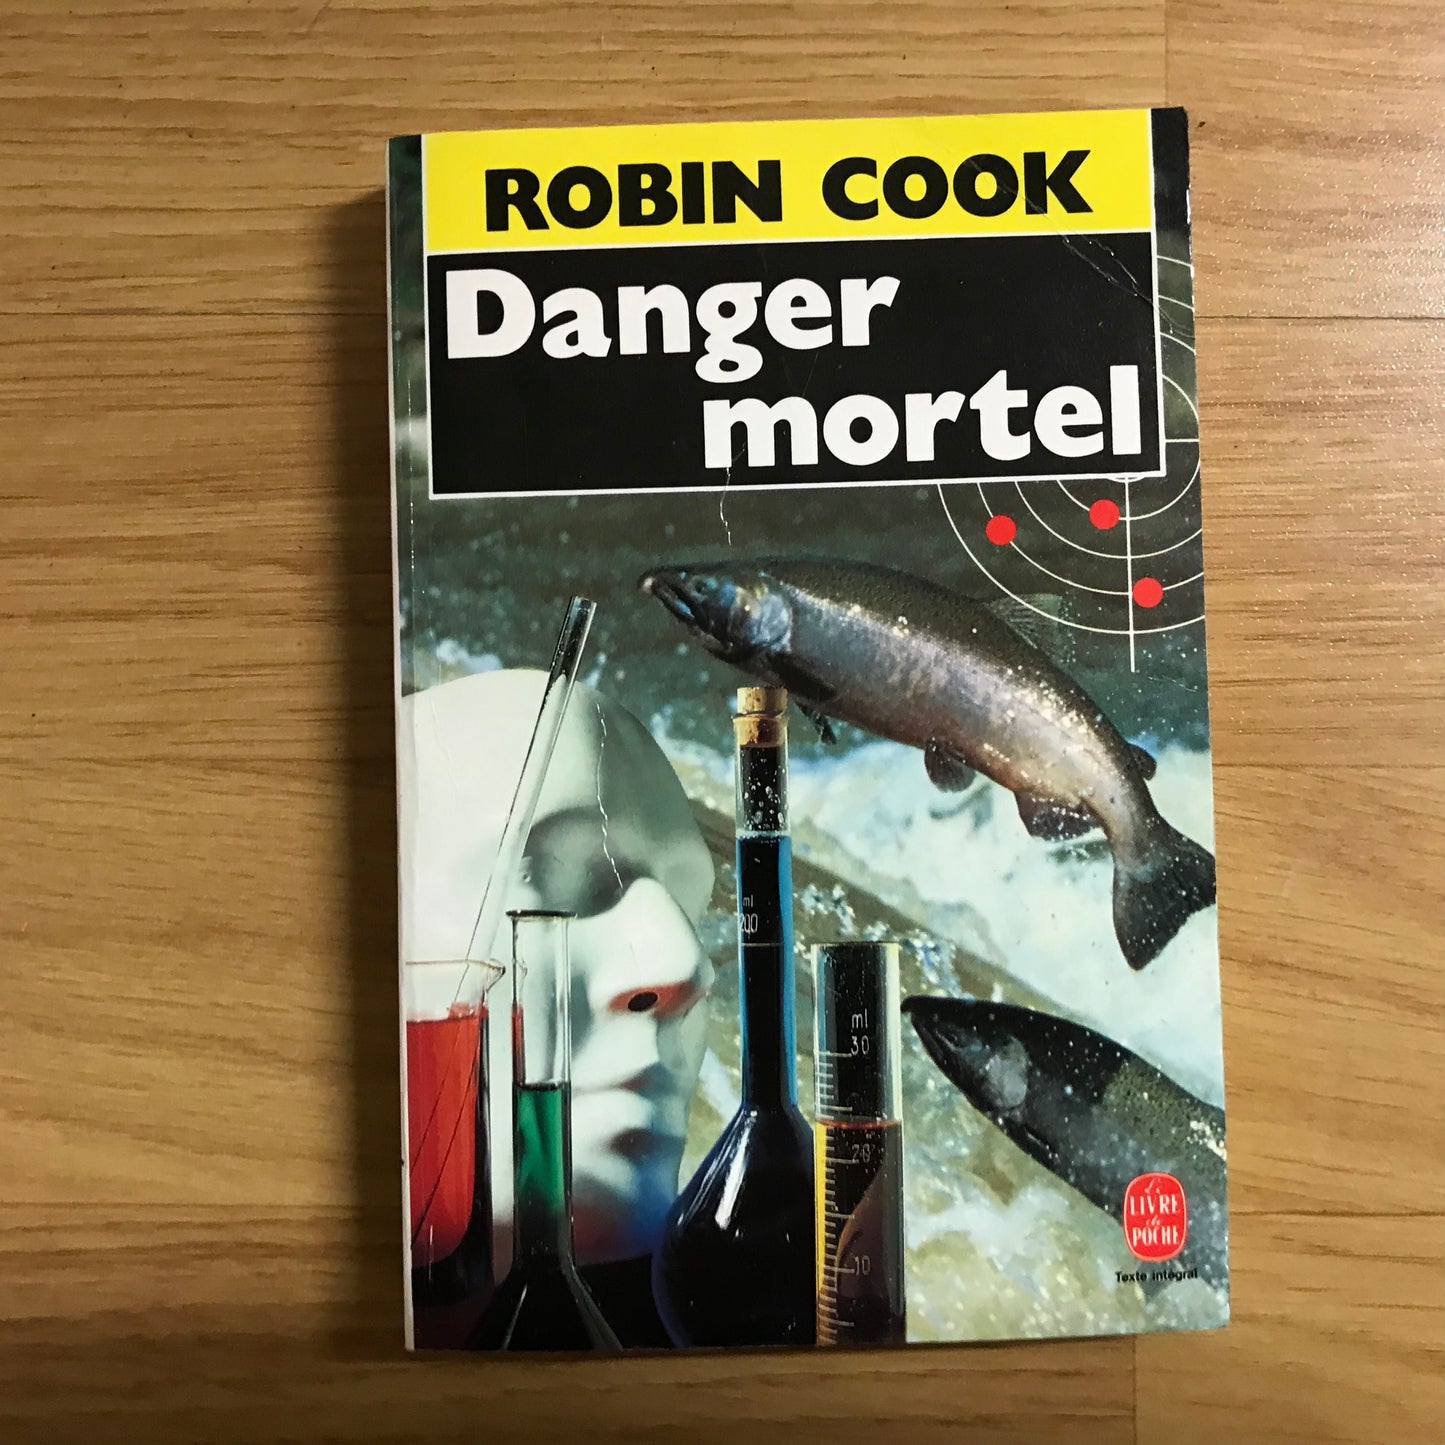 Cook, Robin - Danger mortel